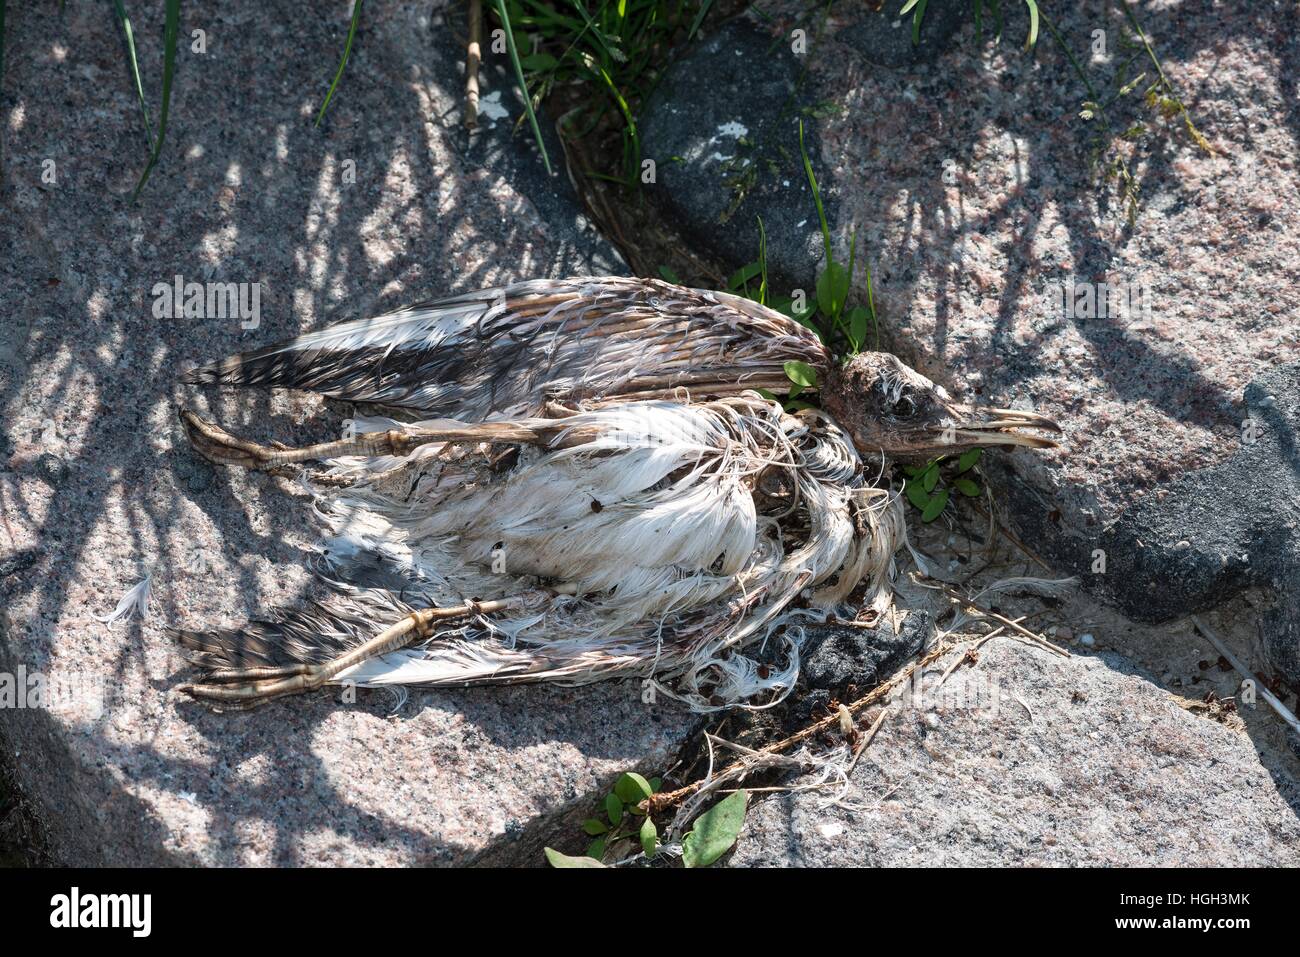 Dead seagull (Laridae), lying on stones, Schleswig-Holstein Wadden Sea National Park, Schleswig-Holstein, Germany Stock Photo